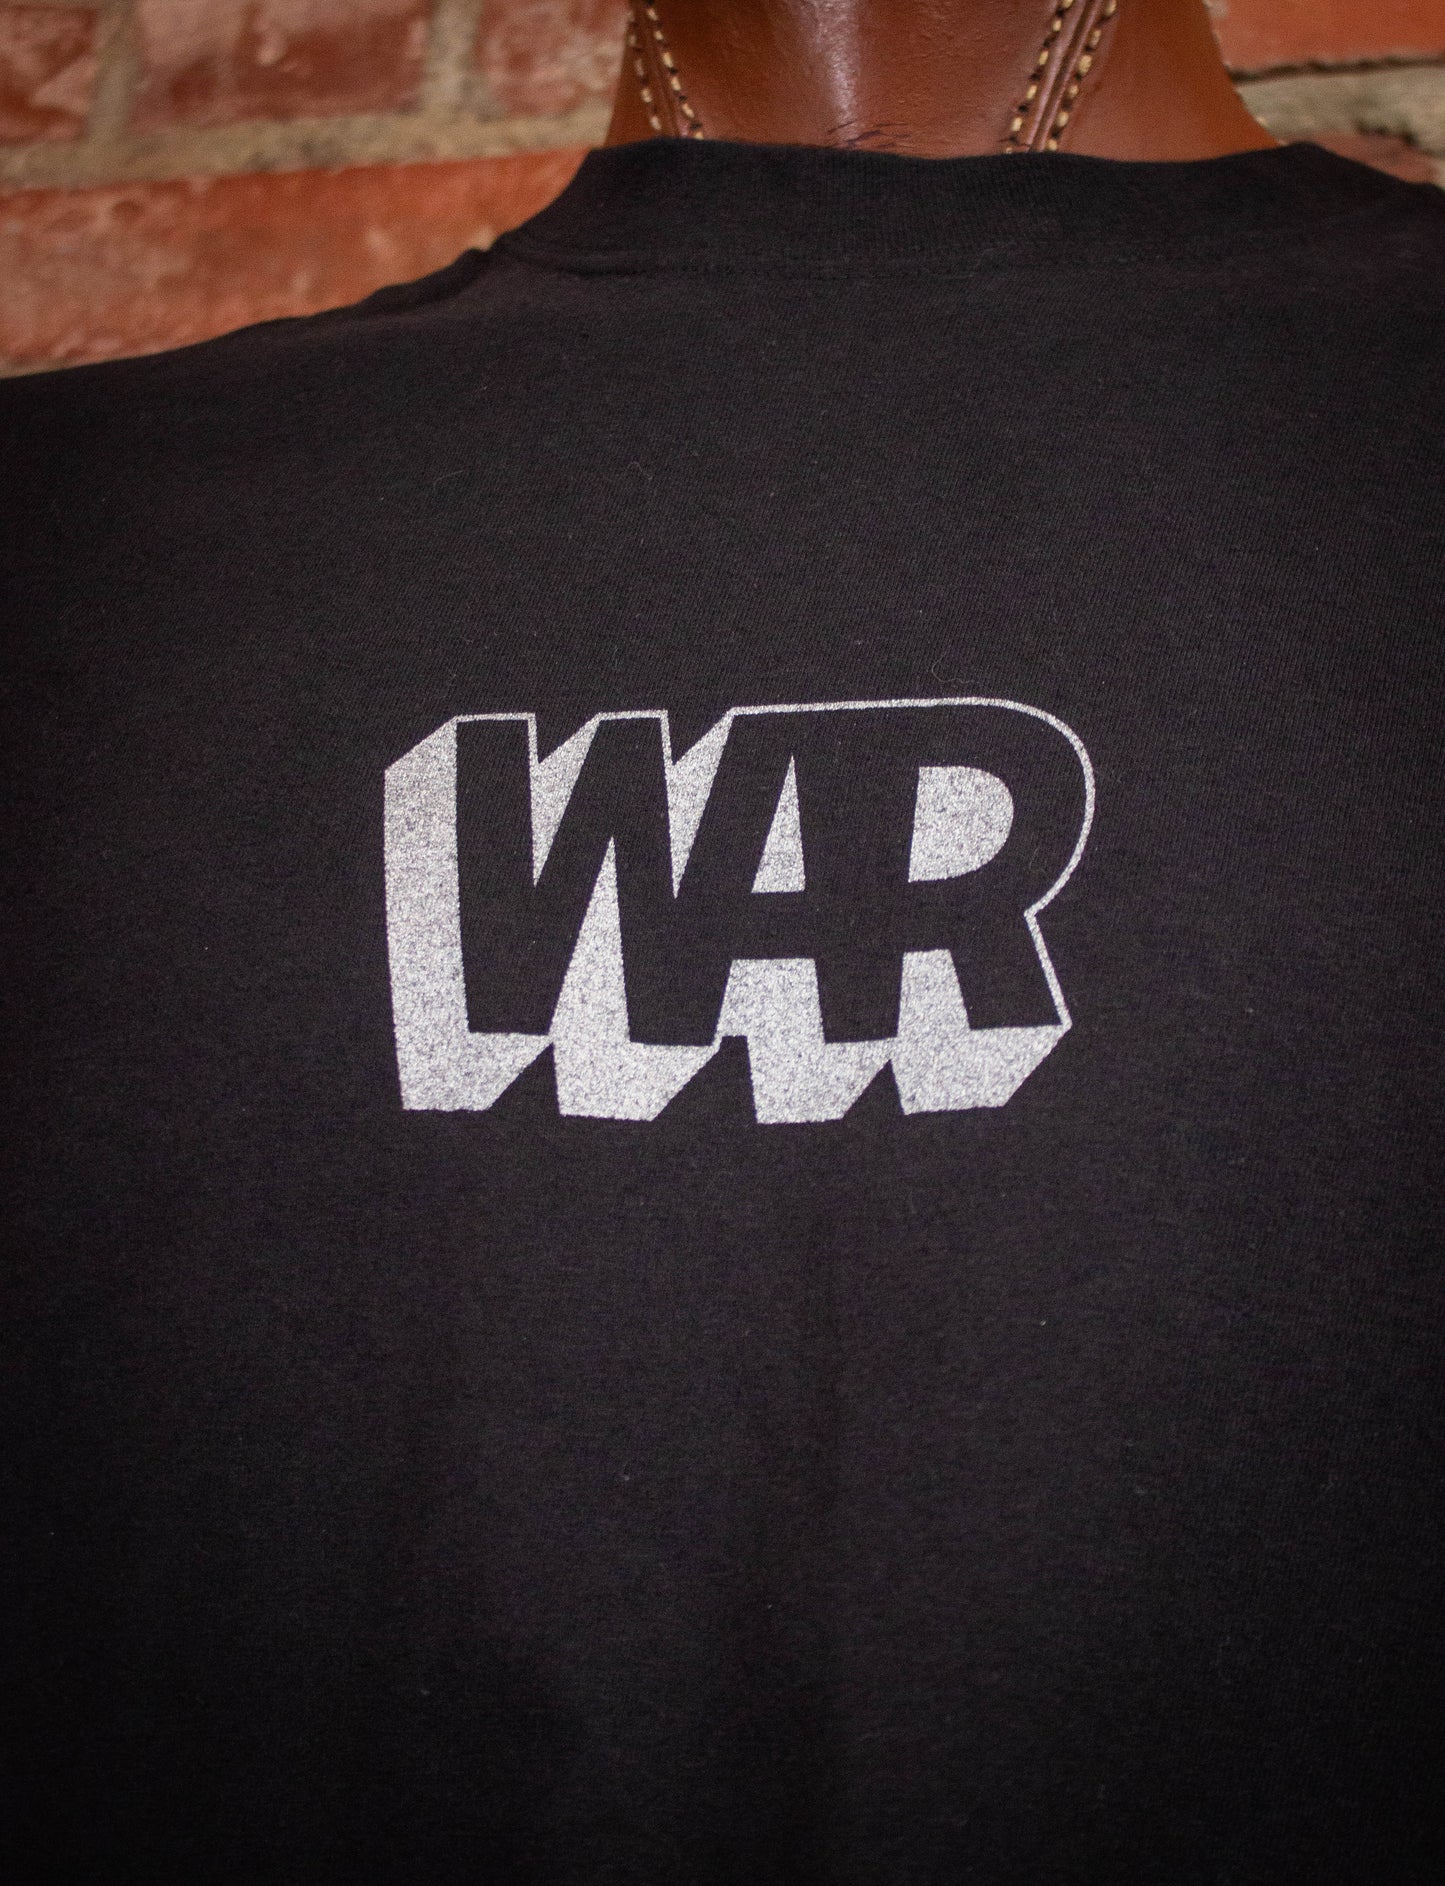 Vintage WAR Concert T Shirt 2003 Black 2XL